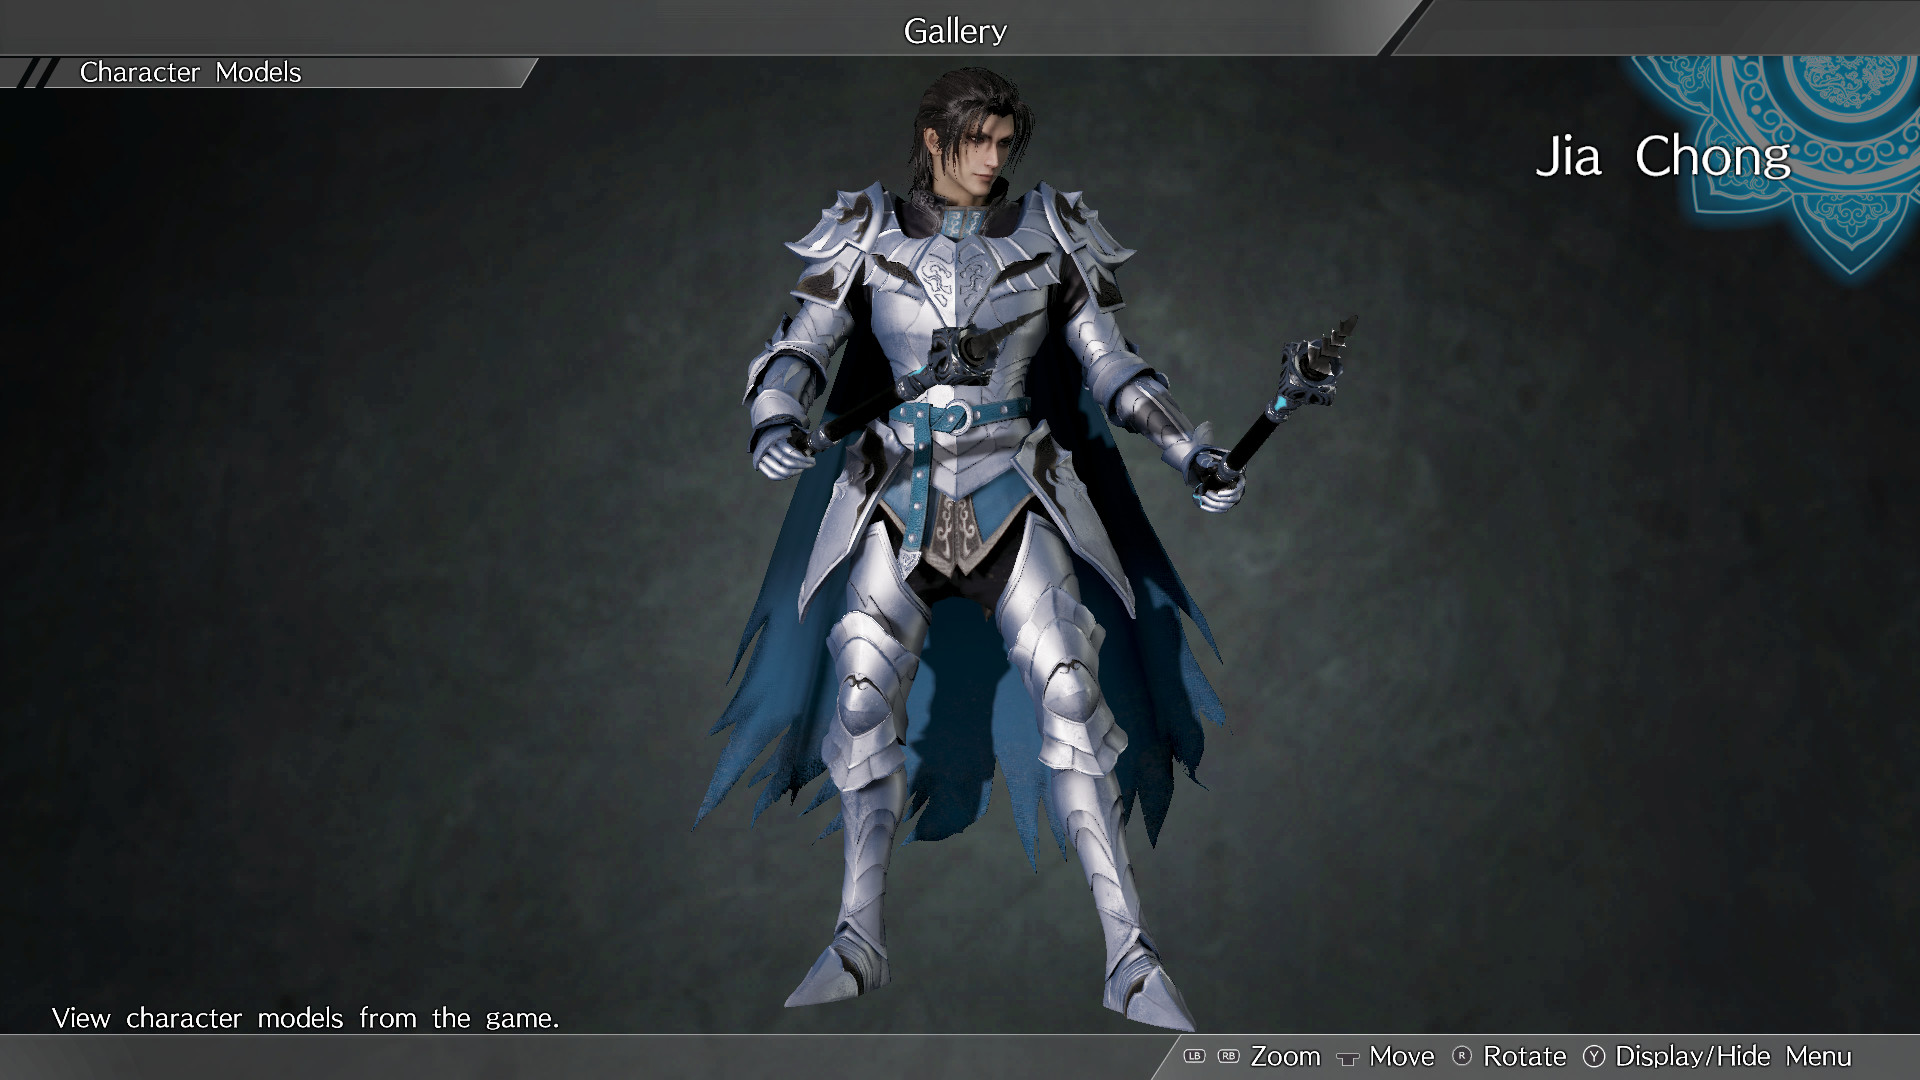 DYNASTY WARRIORS 9: Jia Chong "Knight Costume" / 賈充「騎士風コスチューム」 Featured Screenshot #1